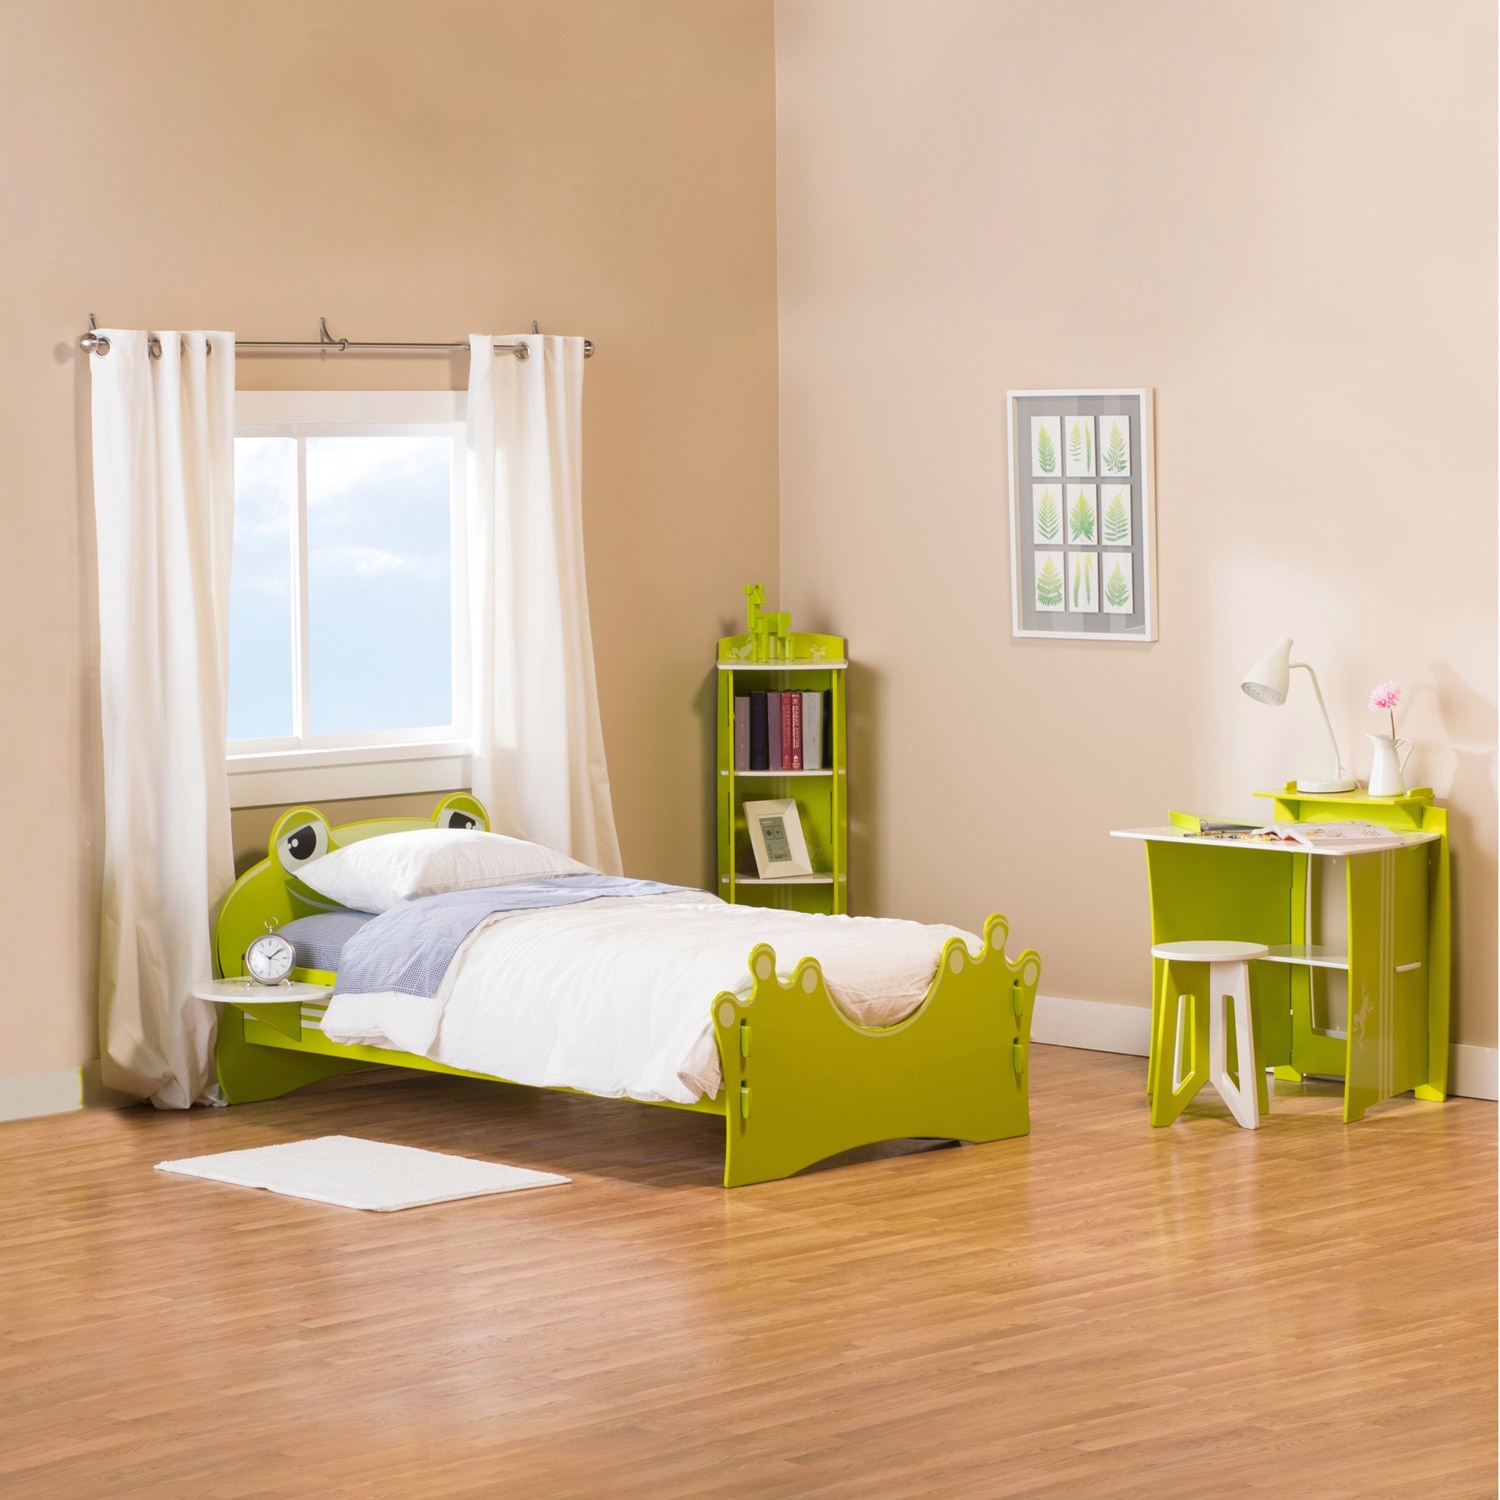 Rst Brands Rst Brands Legare Frog 3 piece Bedroom Set Green Size Twin